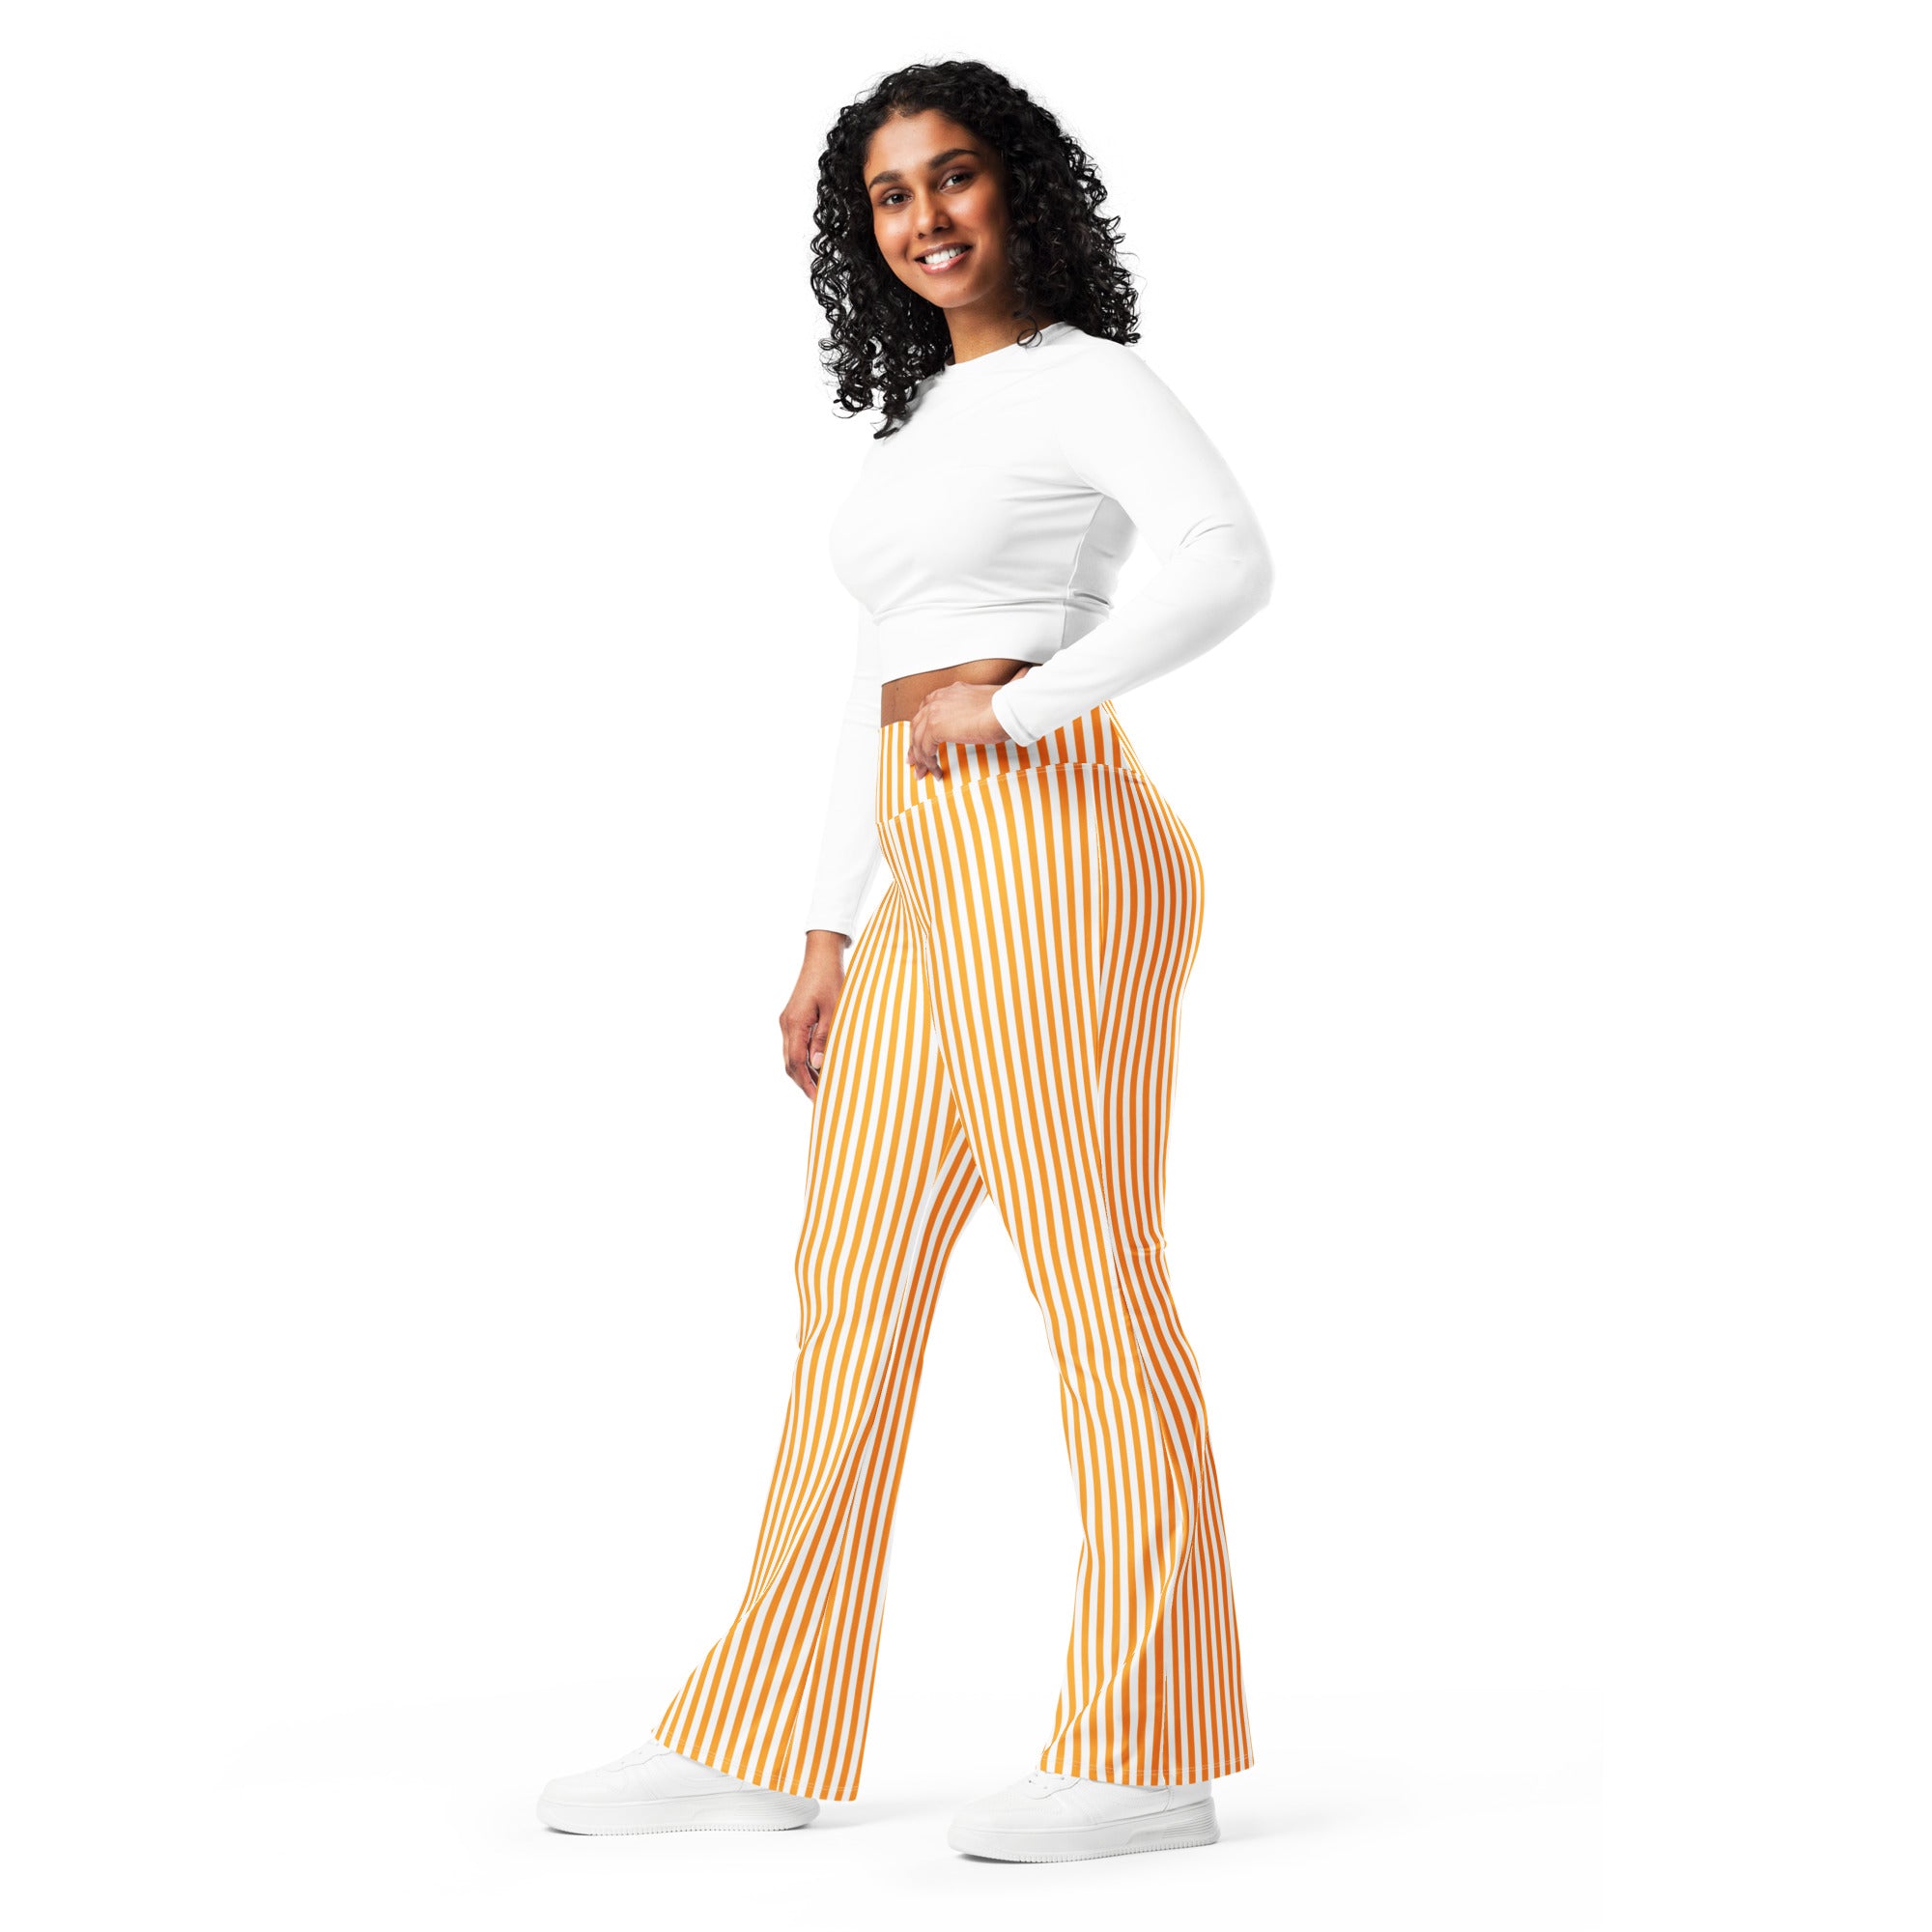 Flare leggings- White and Orange Stripes